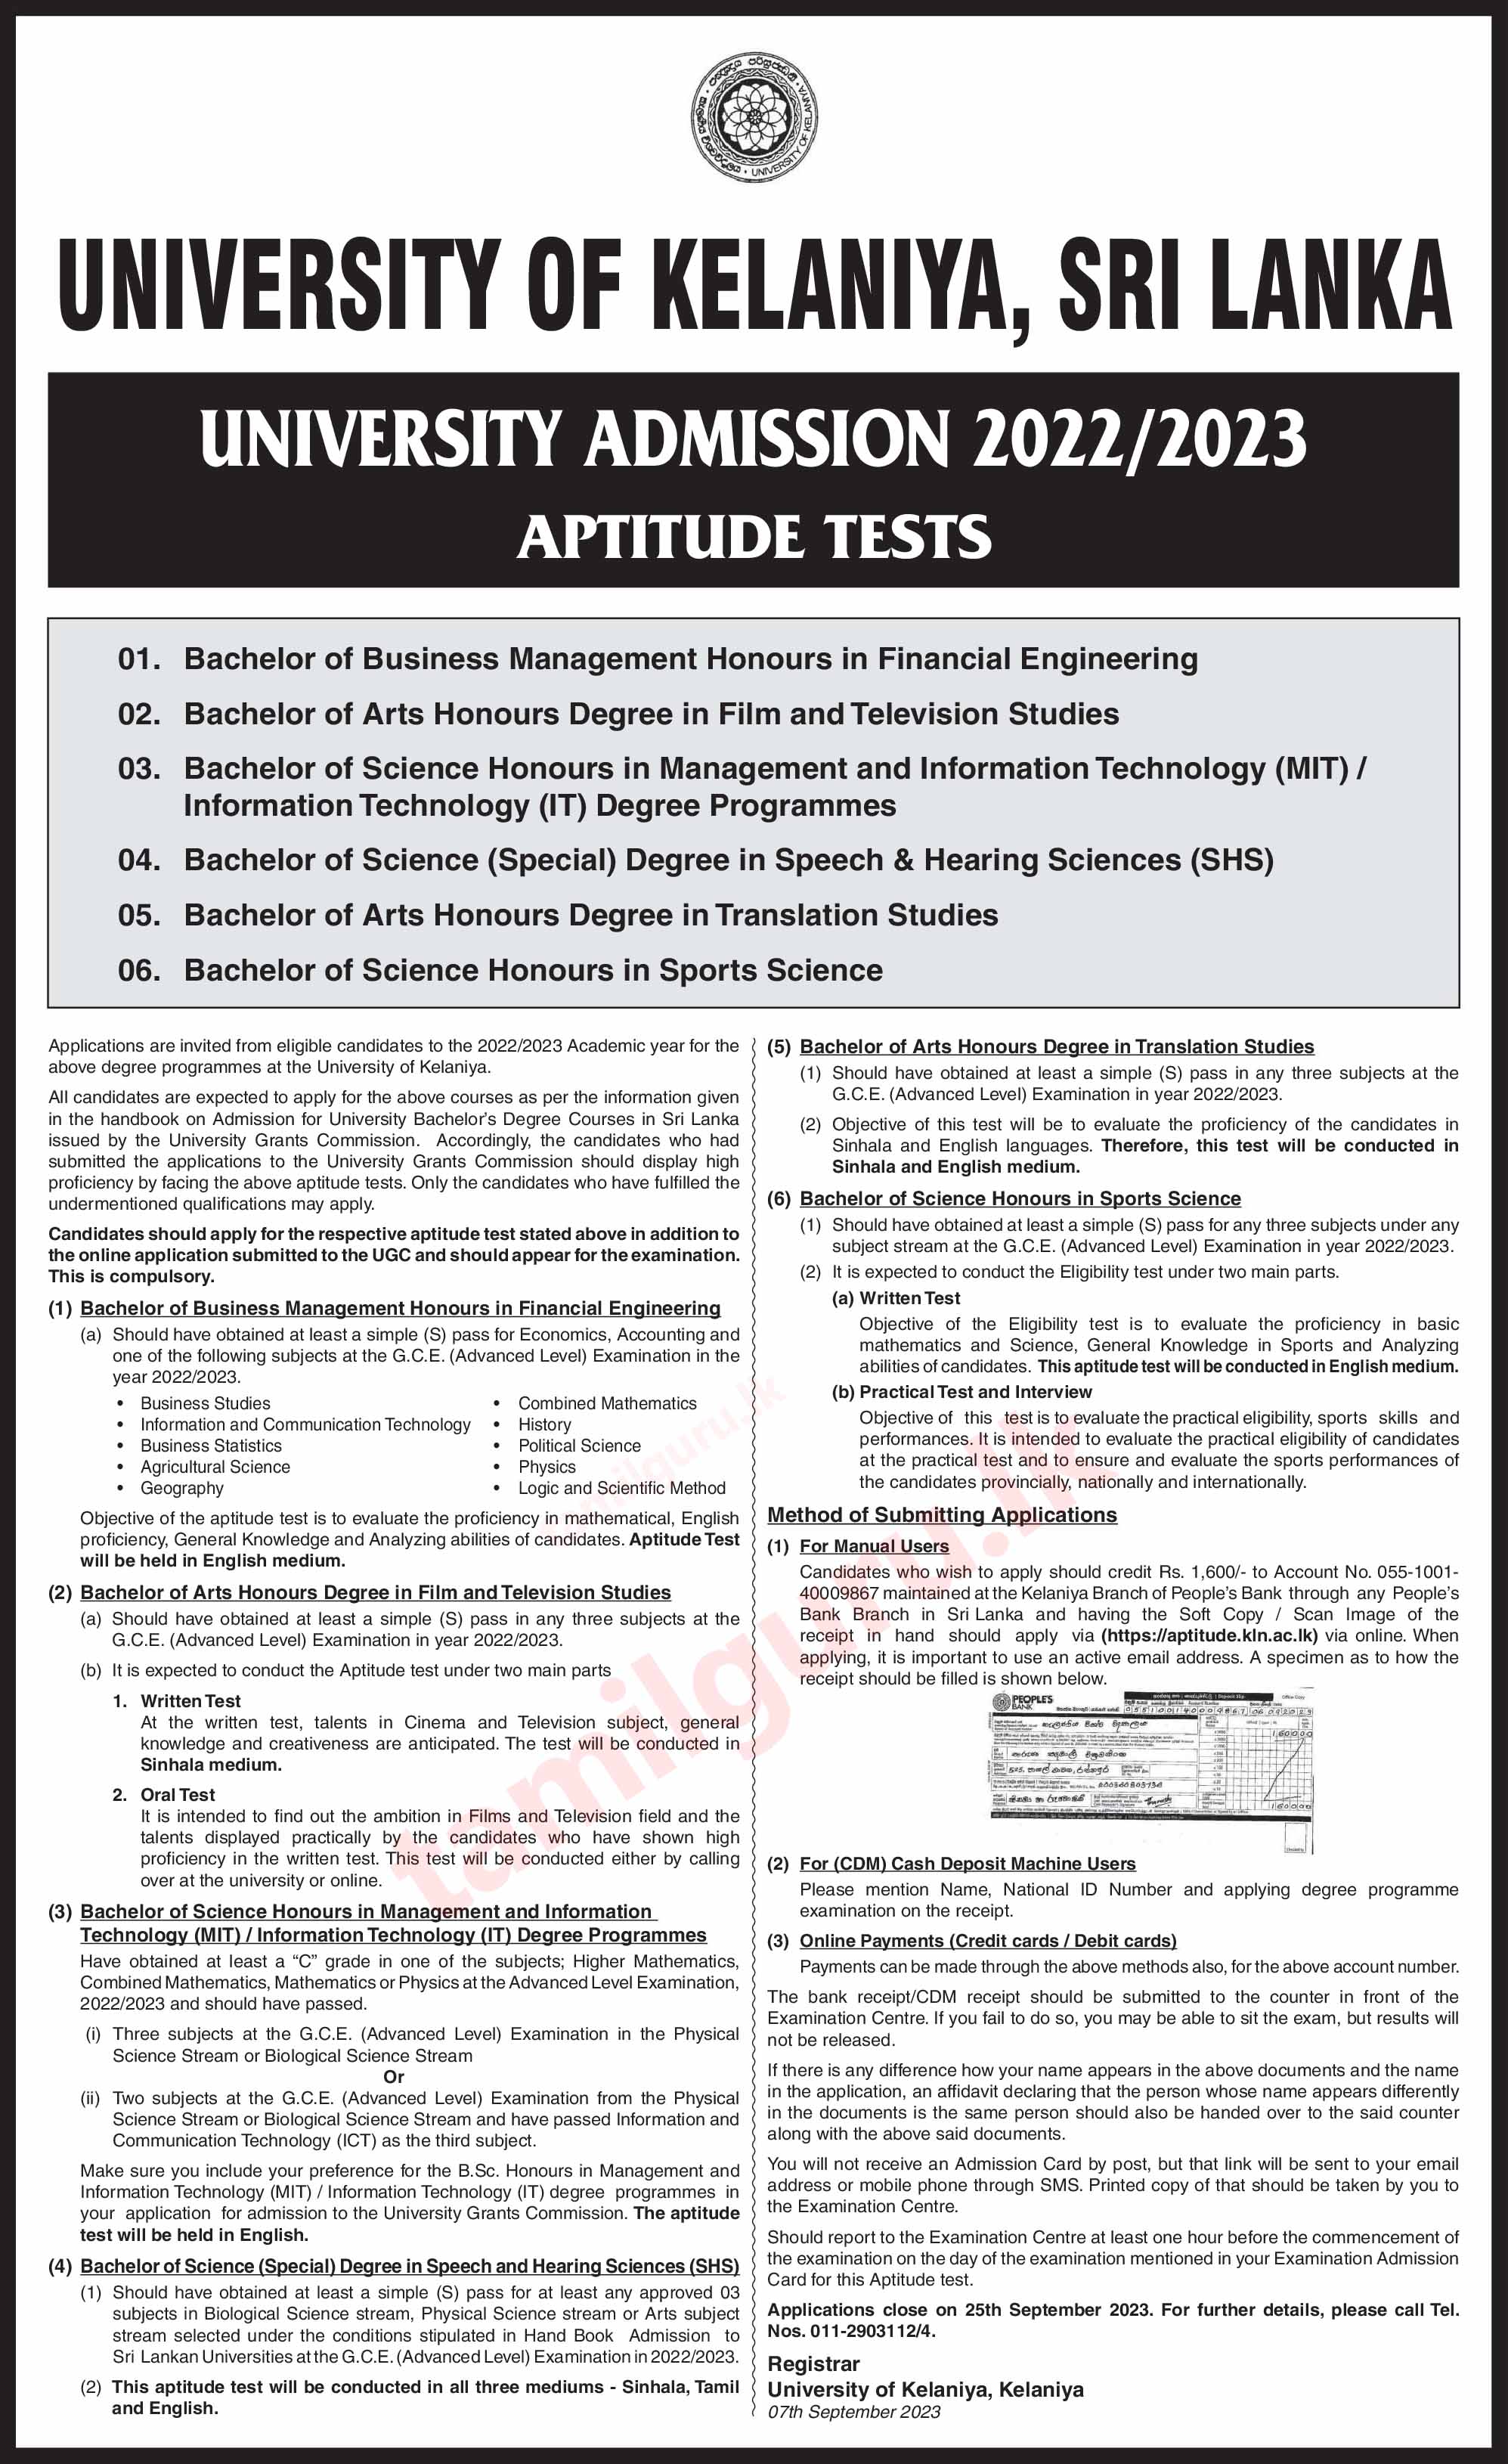 University of Kelaniya Aptitude Test Application 2023 - Details in English